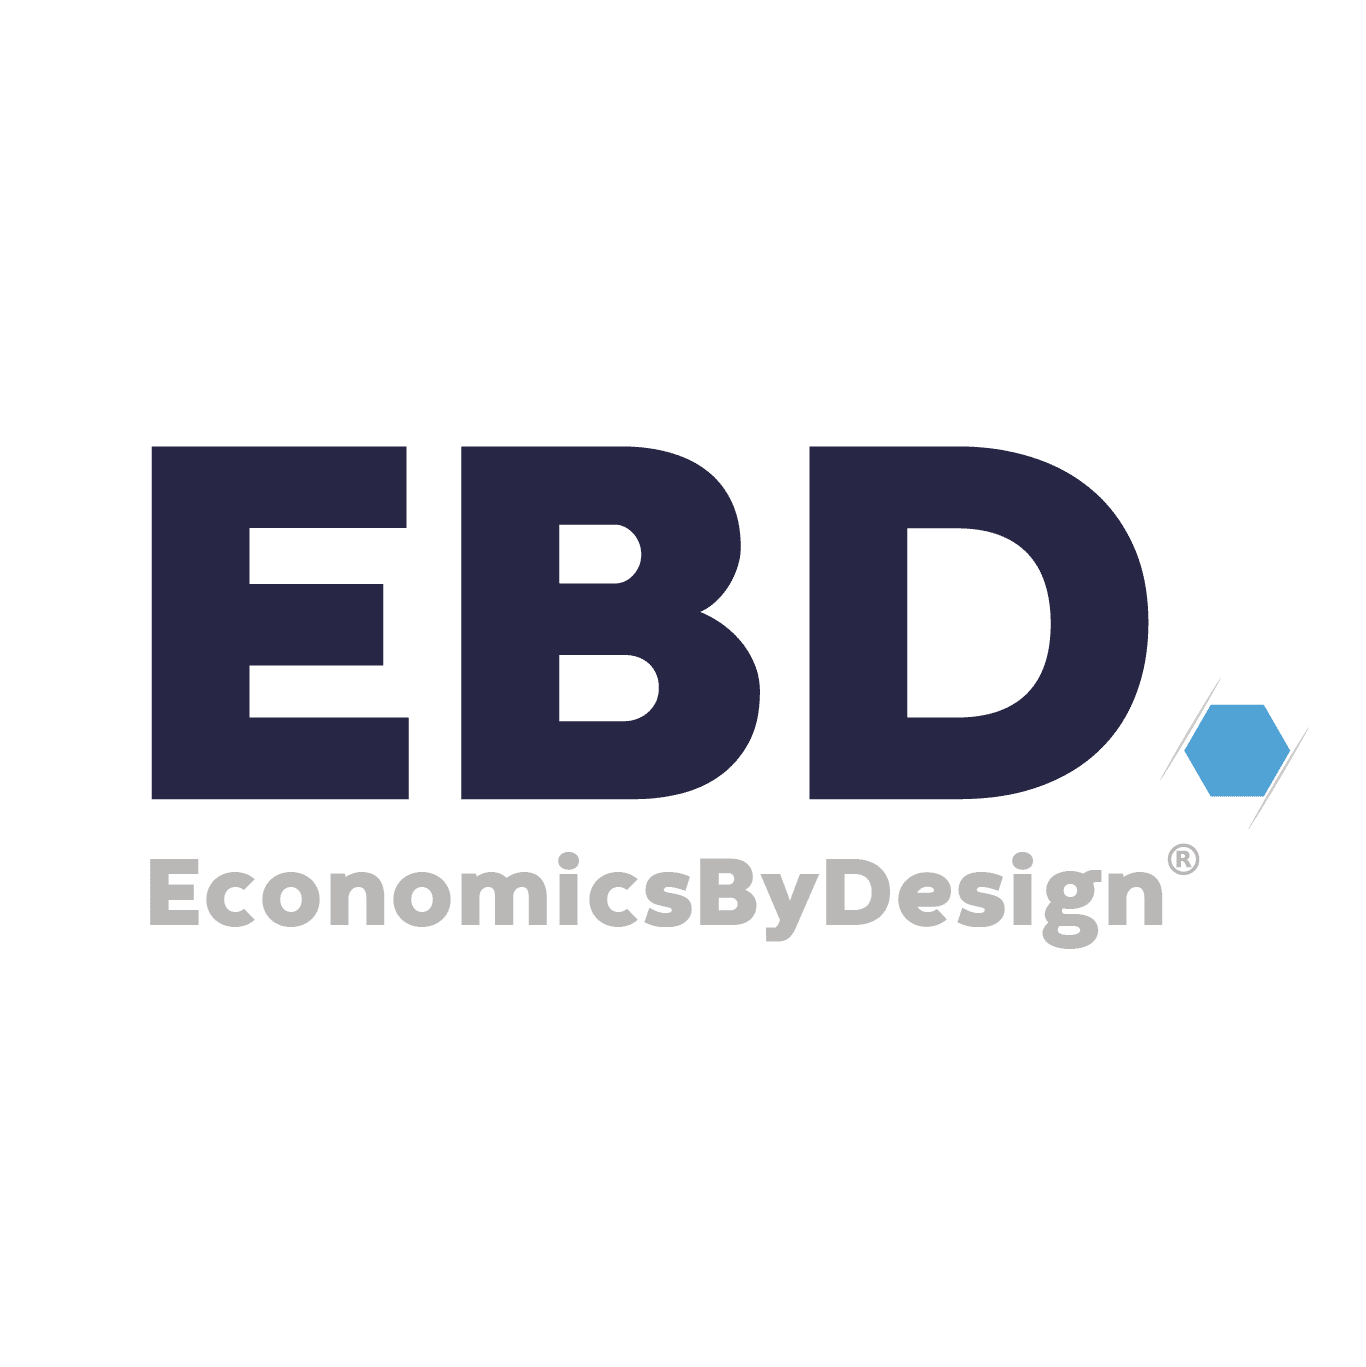 ebd logo economics by design